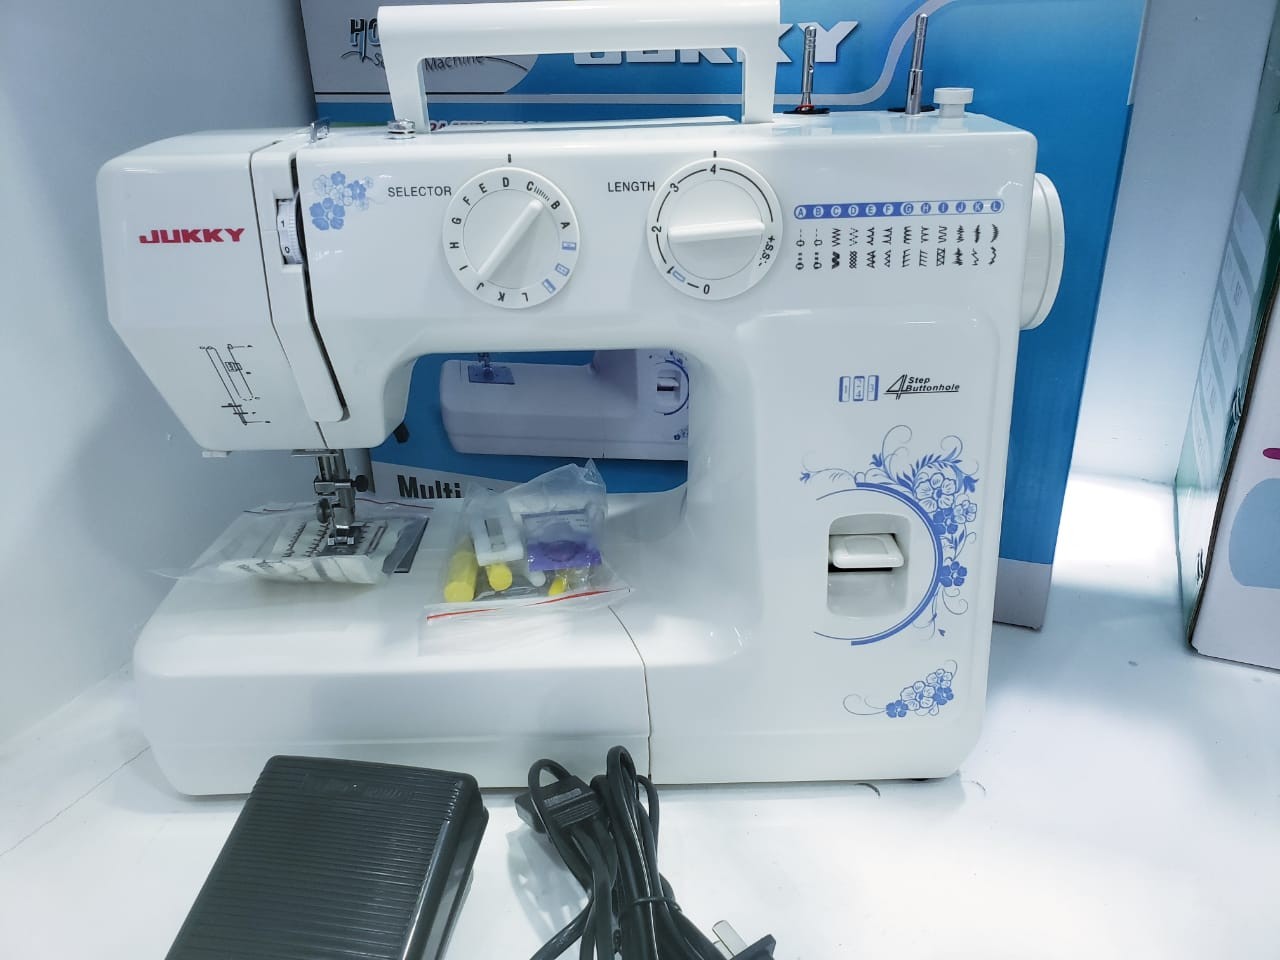 equipos profesionales - Maquina de coser Electrica multifuncional profesional JUKKY FH6224 1